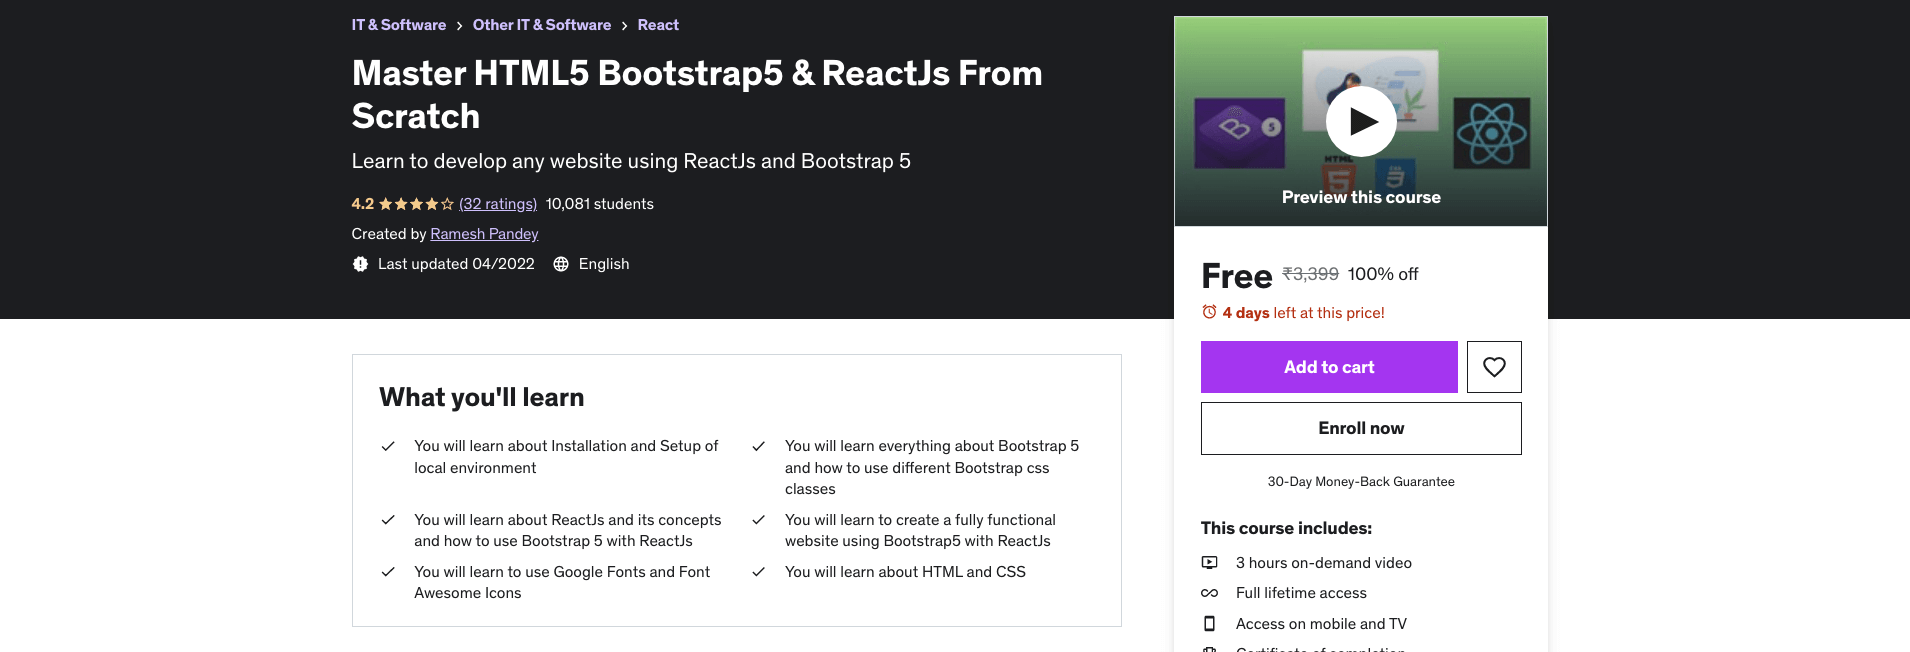 Master HTML5 Bootstrap5 & ReactJs From Scratch